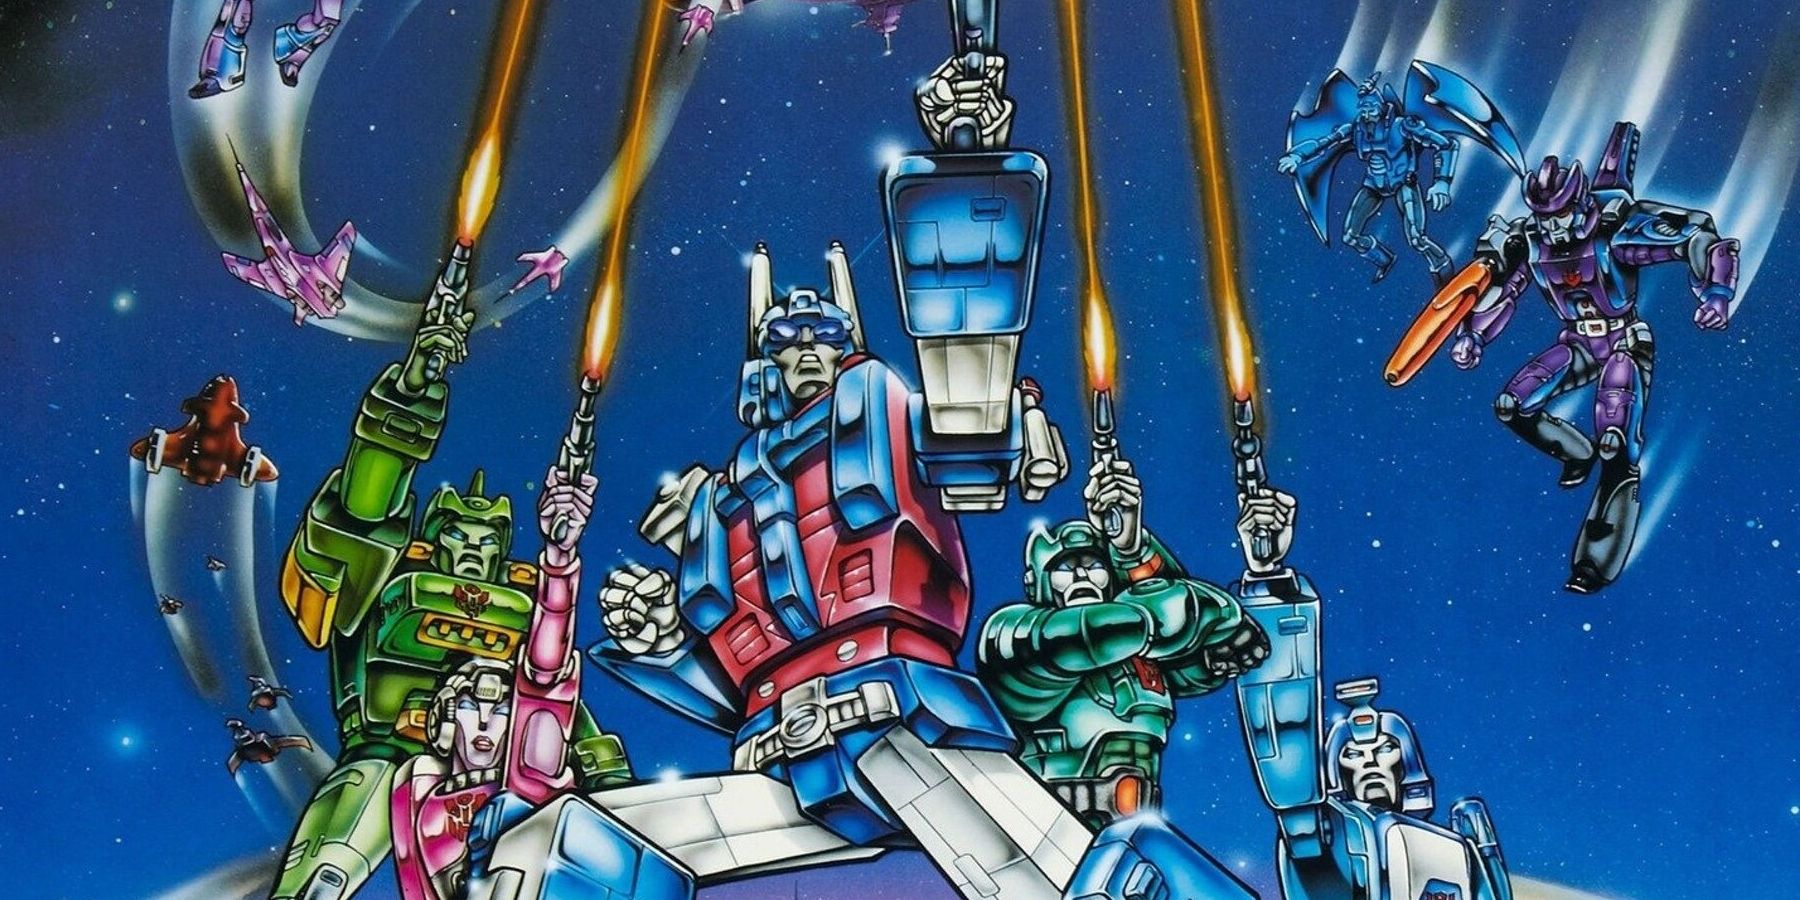 Movie poster art depicting Transformers firing laser guns at their enemies above